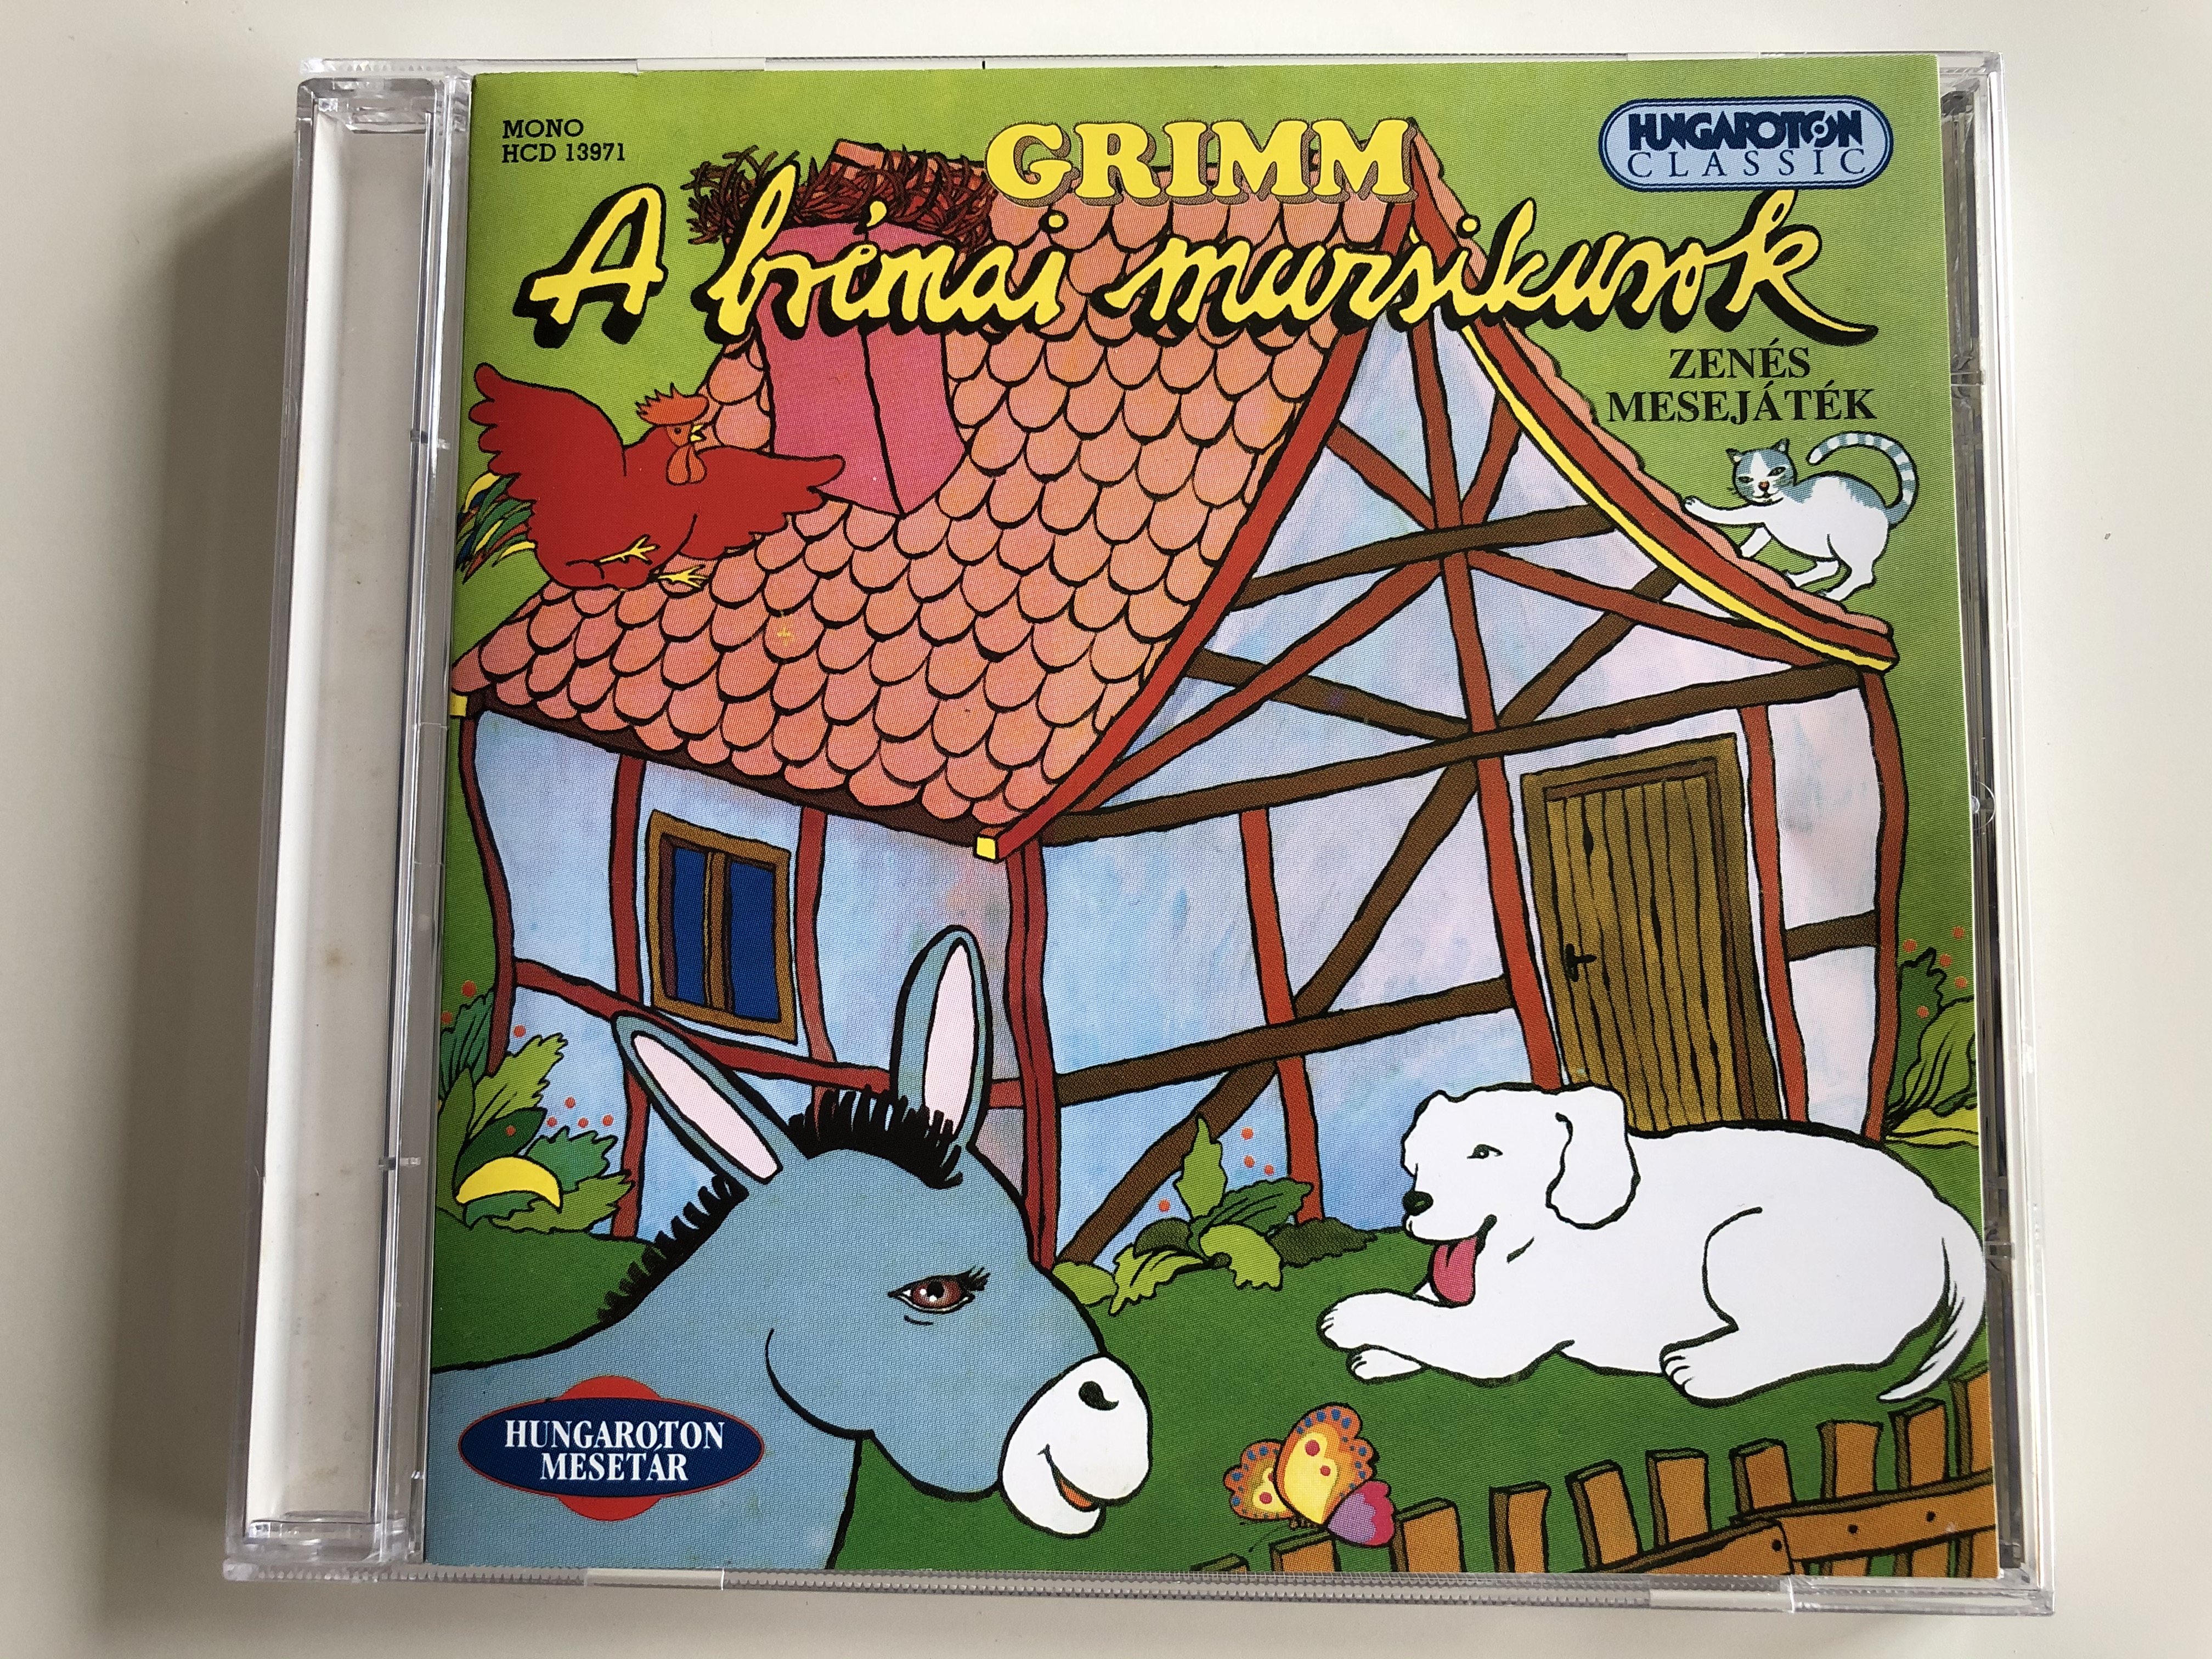 grimm-a-br-mai-muzsikusok-zen-s-mesej-t-k-hungaroton-classic-audio-cd-1984-mono-hcd-13971-1-.jpg